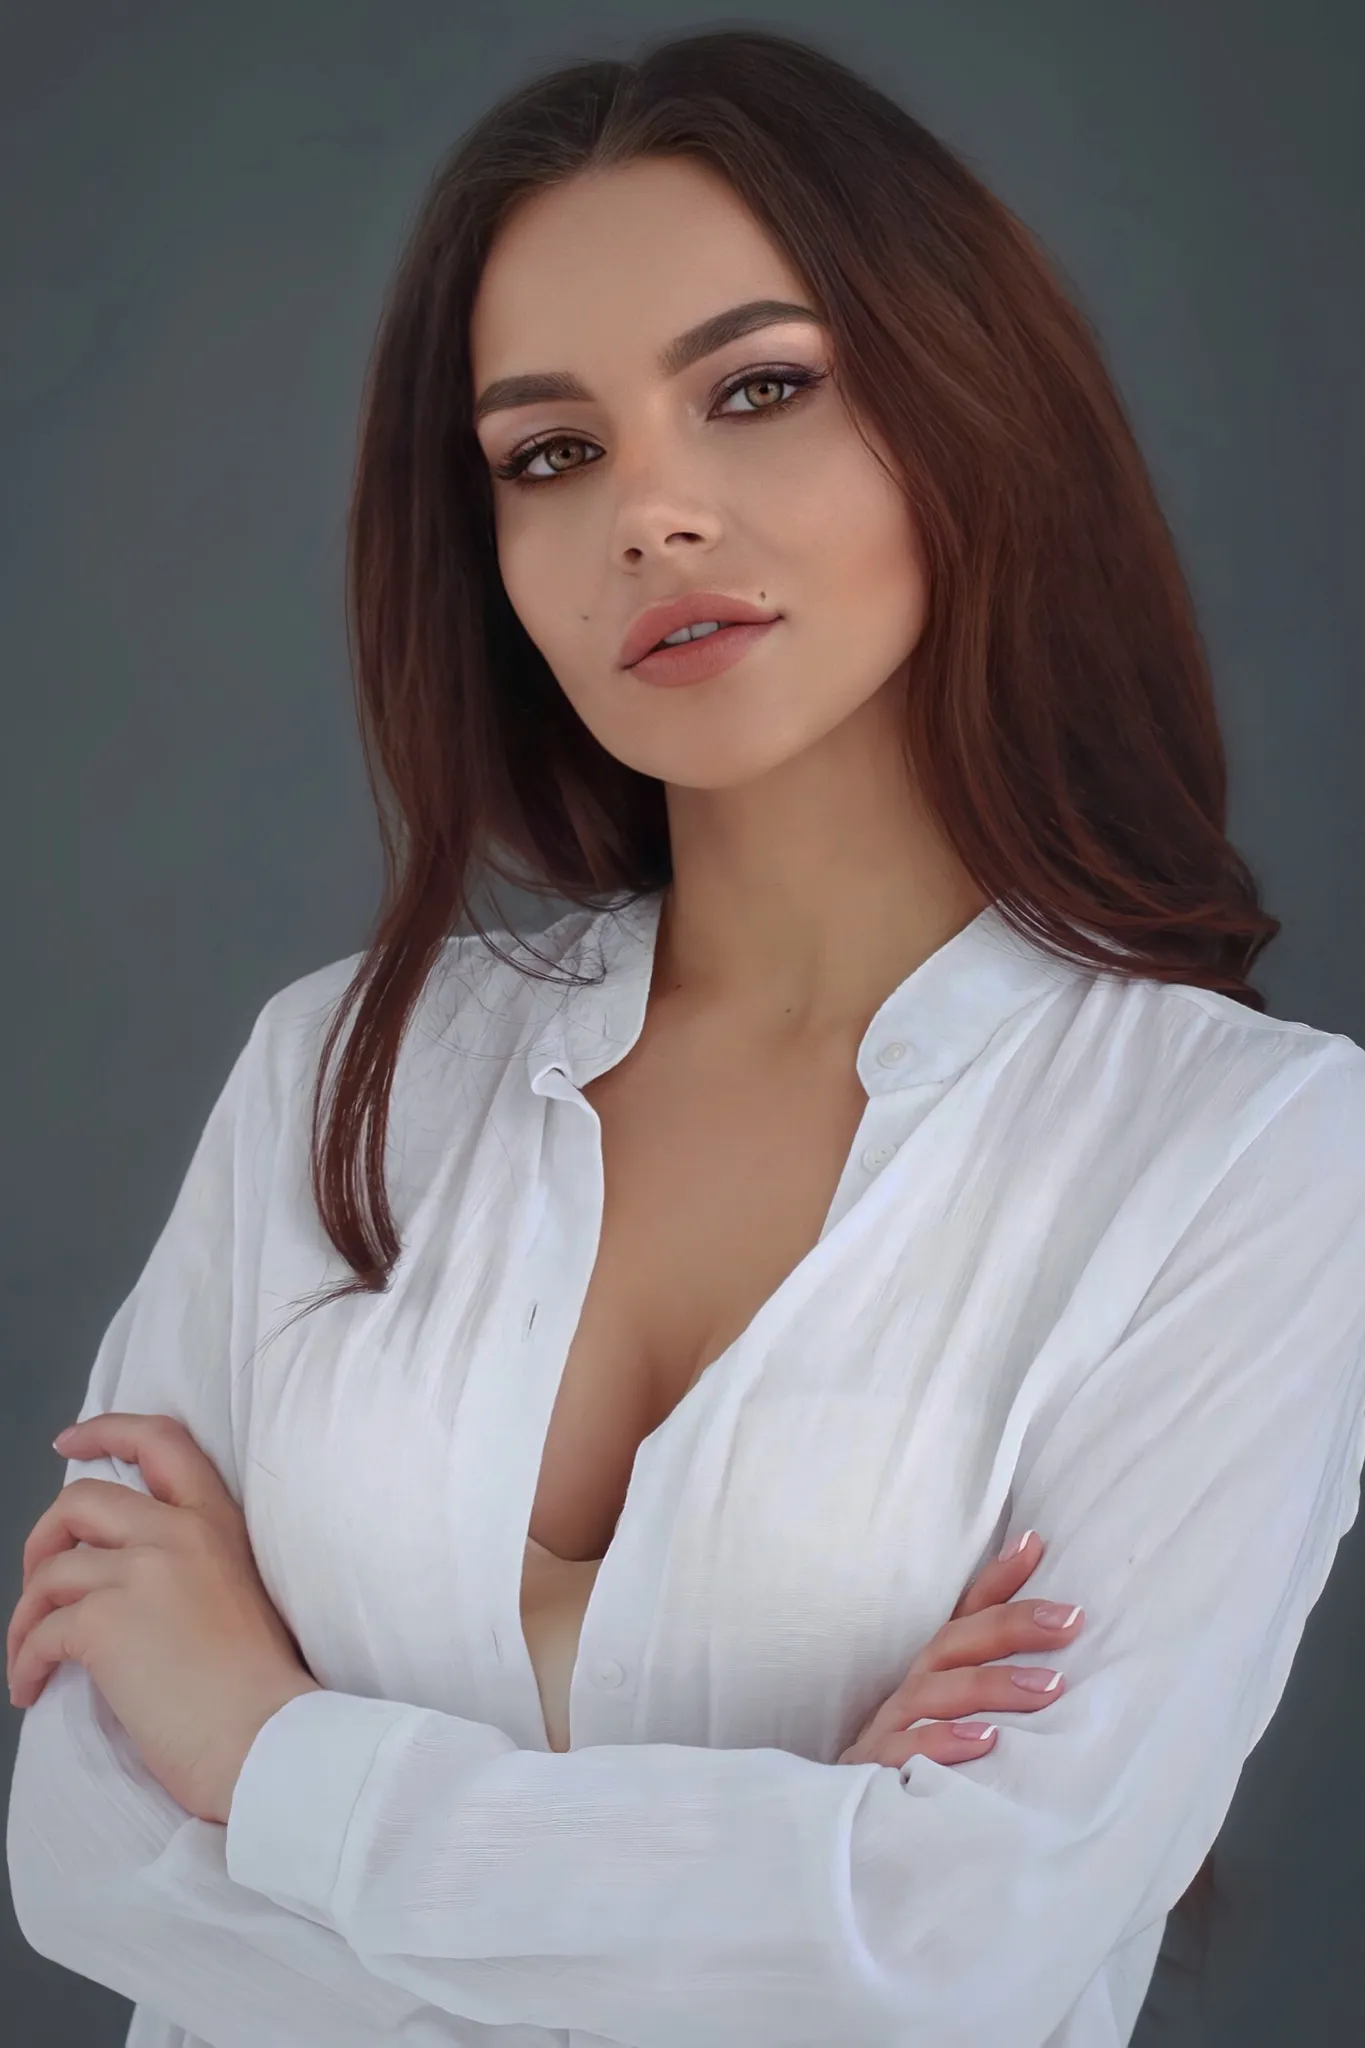 Alyona russian girl dating app